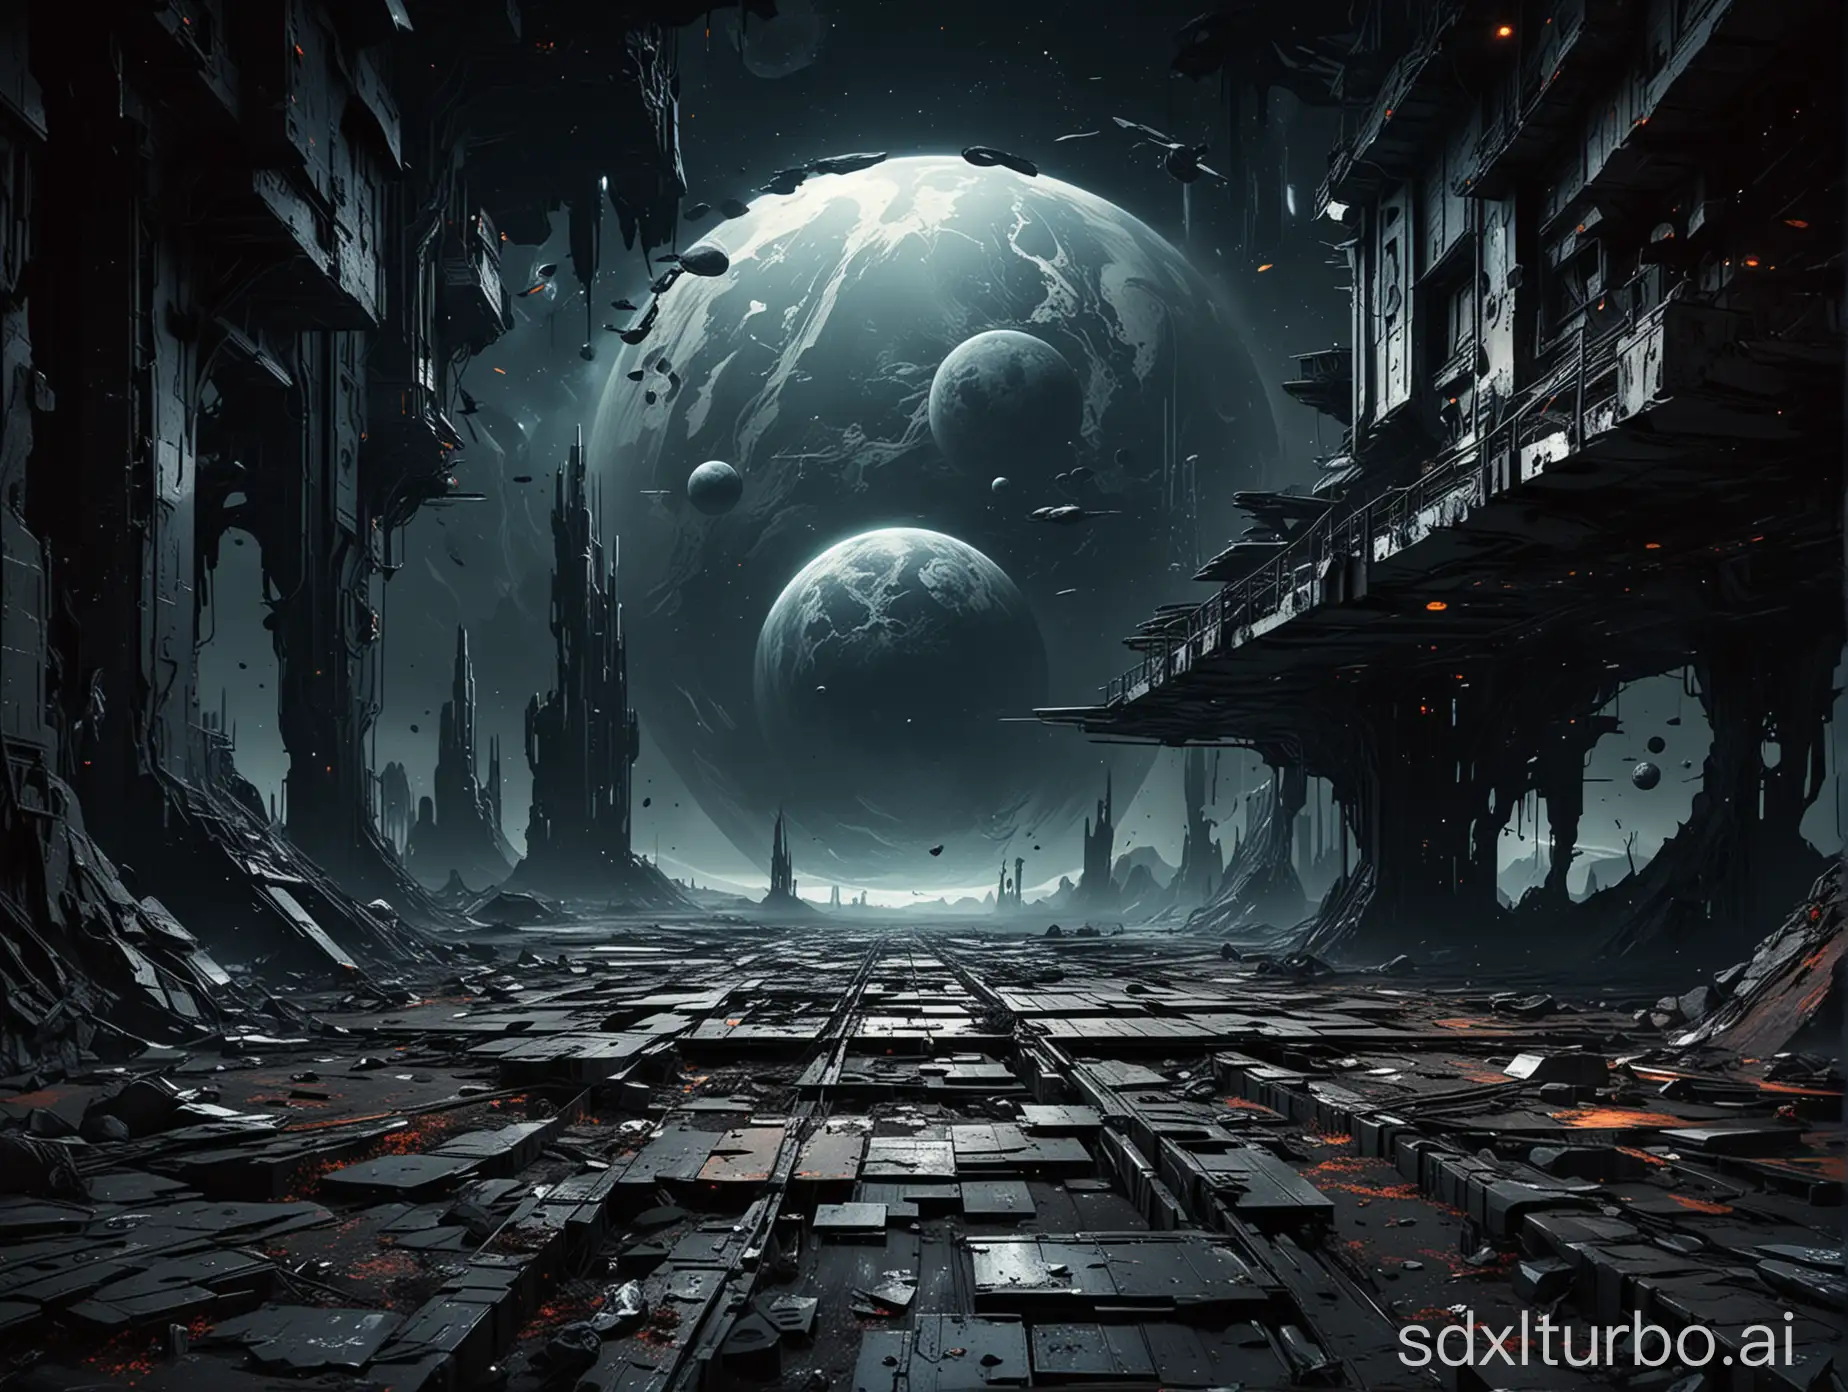 Dark-Futuristic-Platform-with-Planet-View-and-Debris